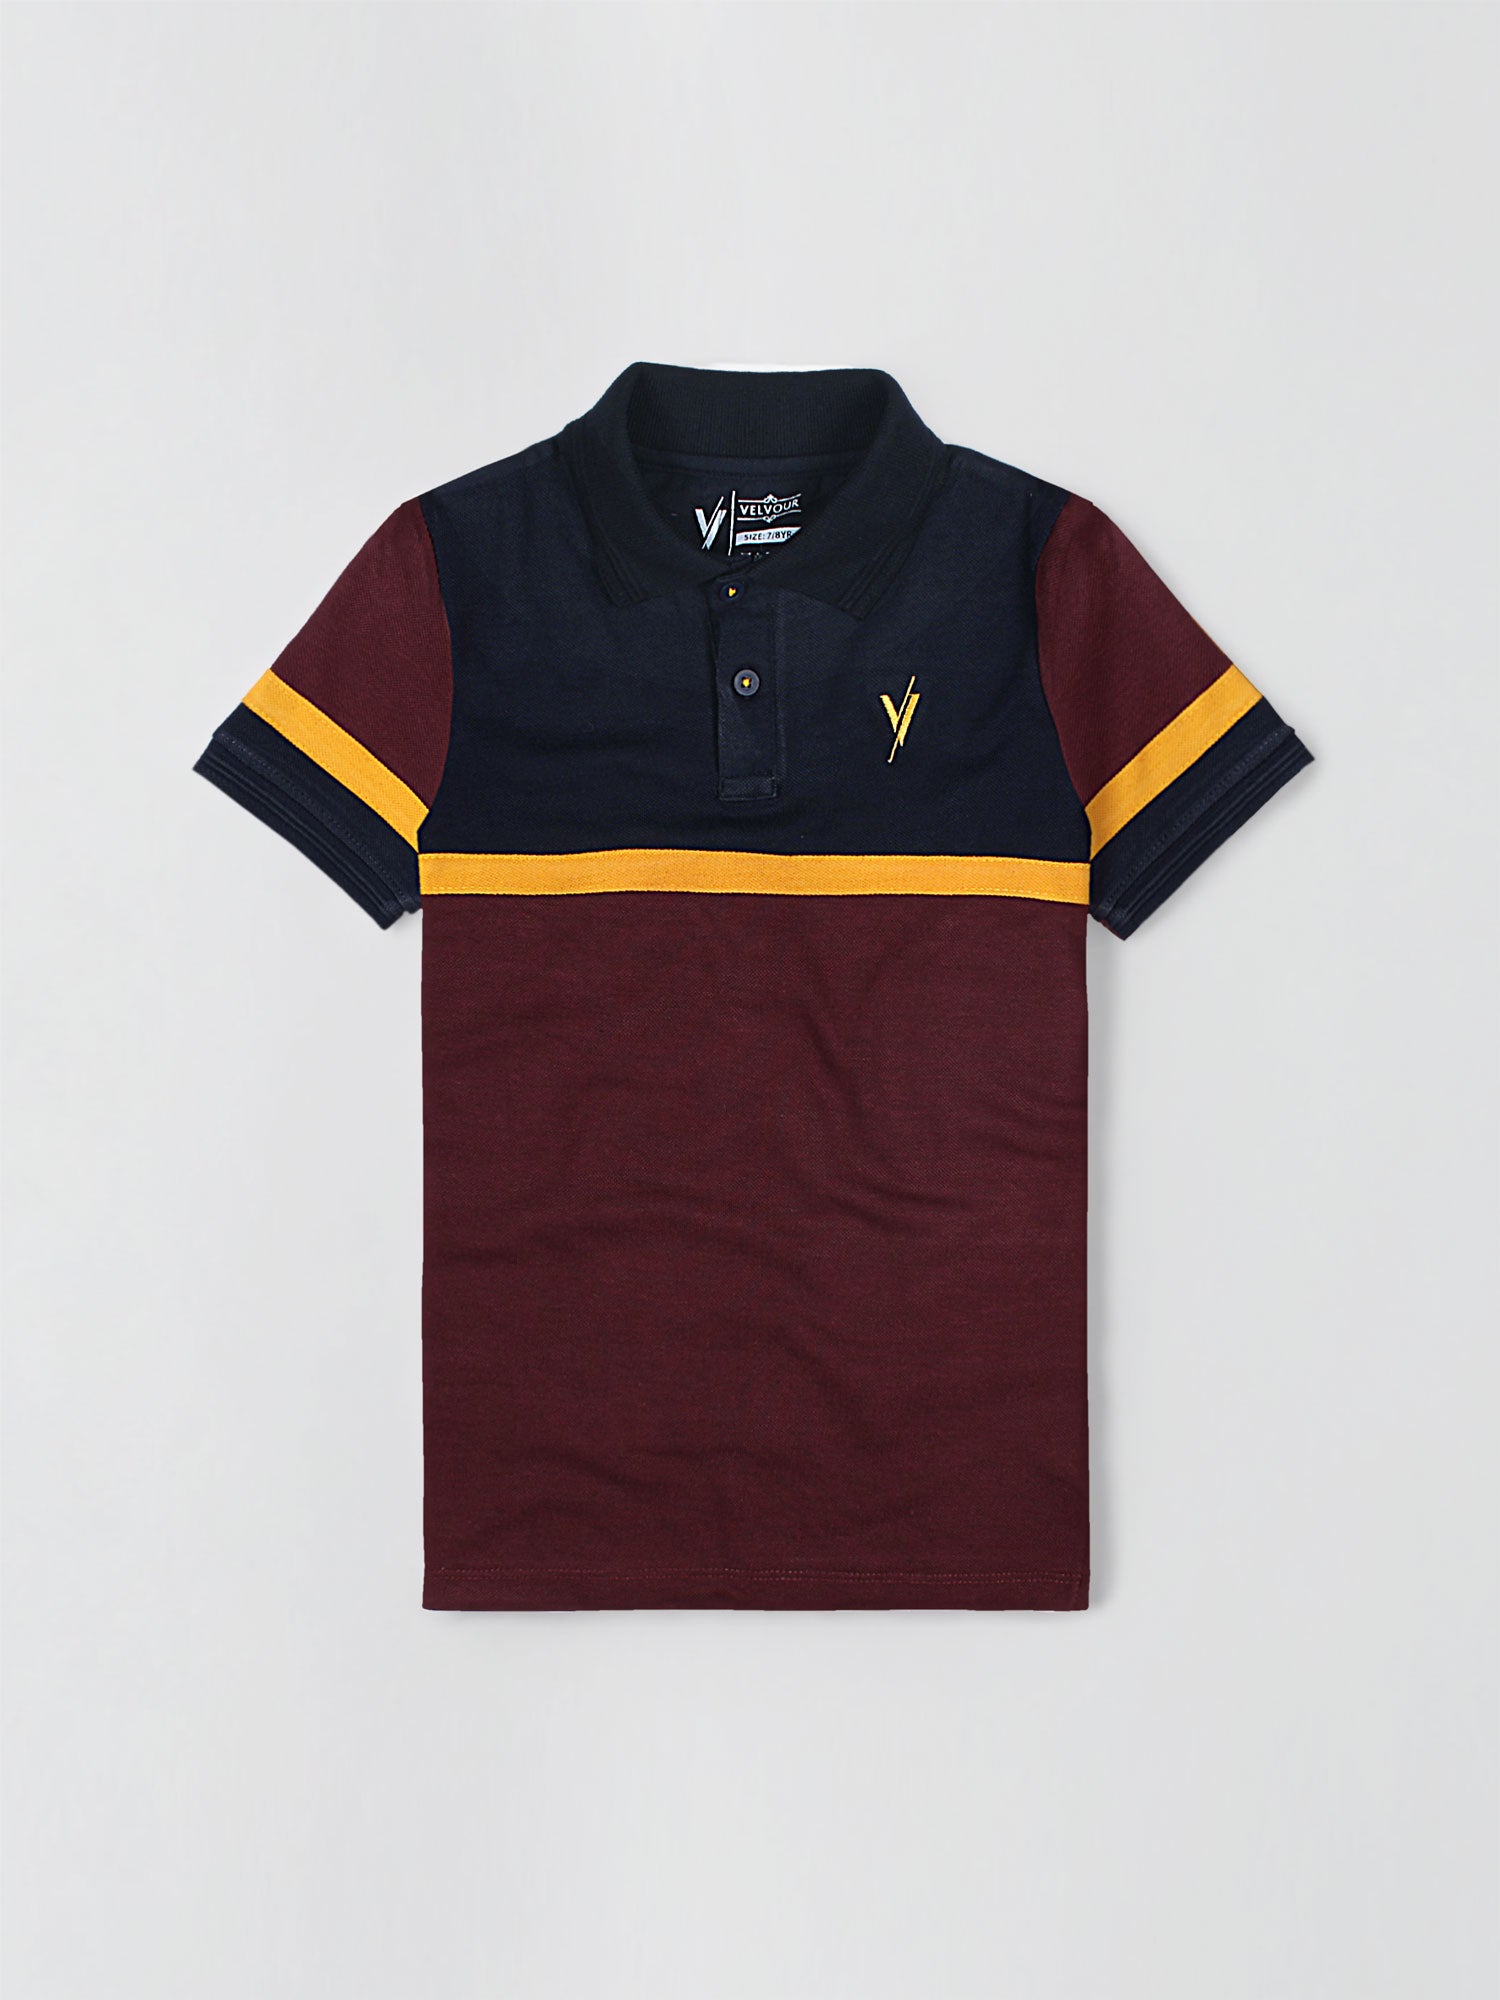 Boys Polo Shirt (Short Sleeve) By Velvour Art# VBP04-B - Velvour Shop